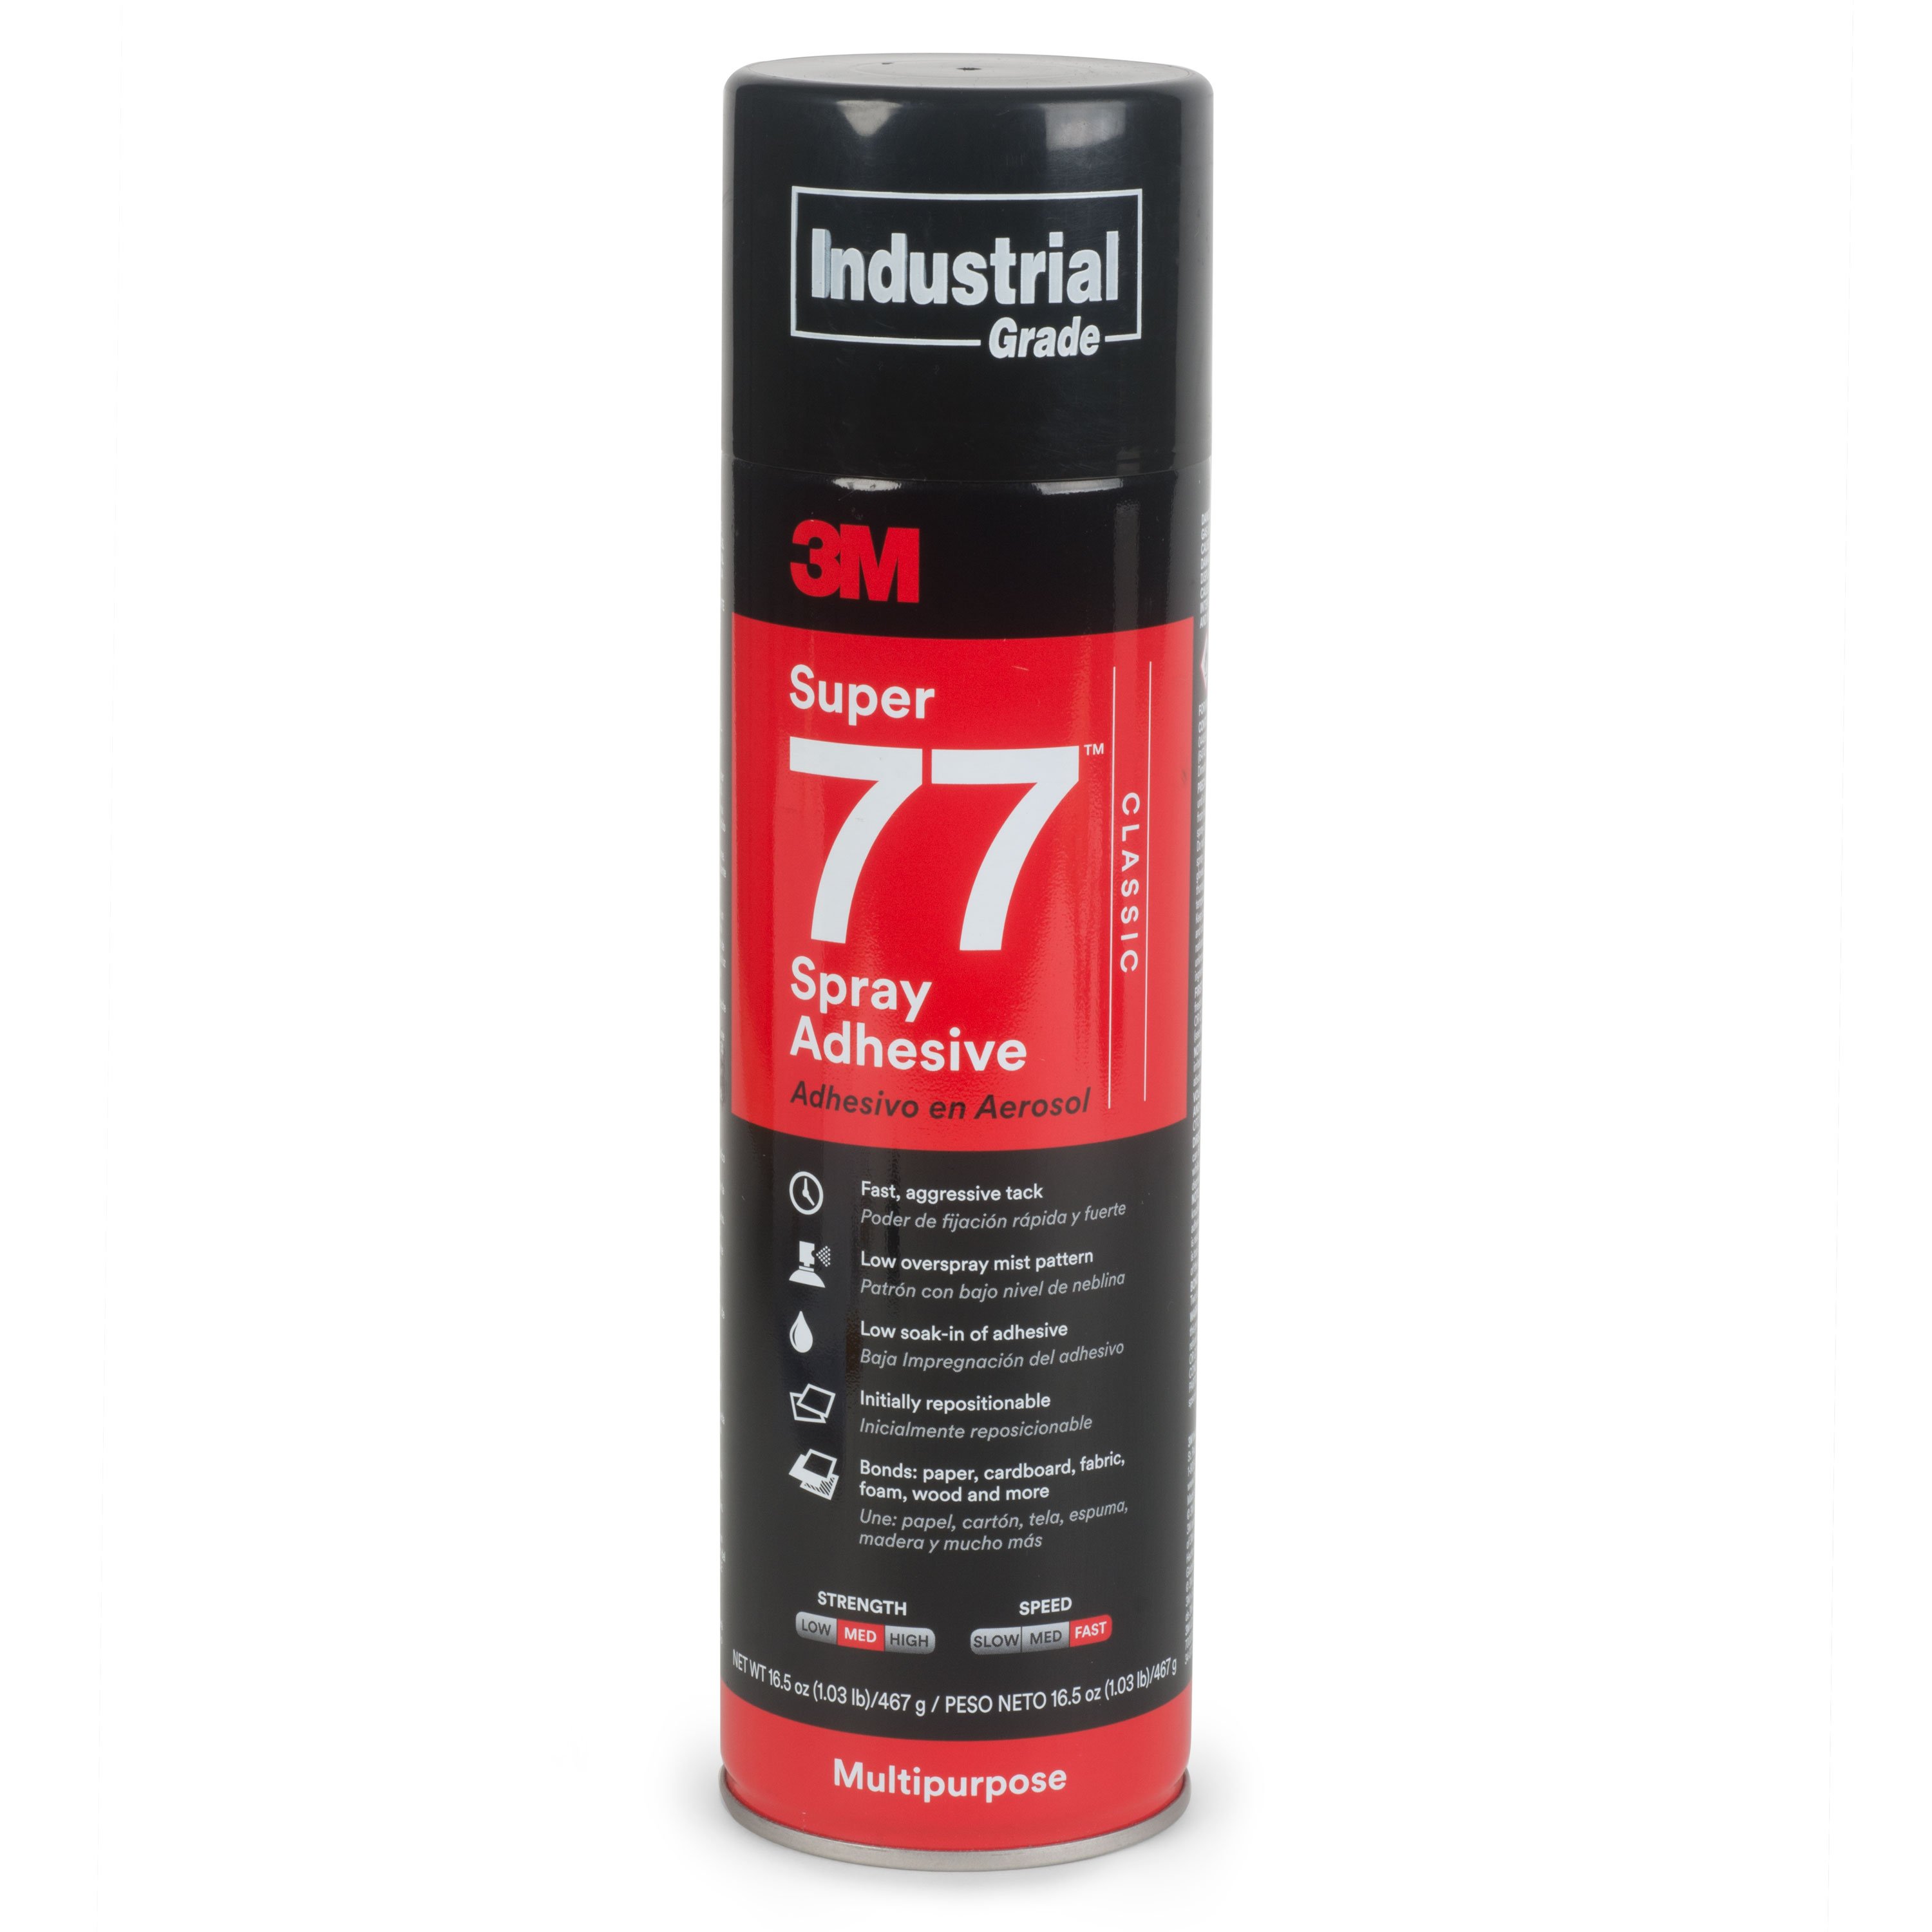 vt-312 sprayable contact adhesive spray glue